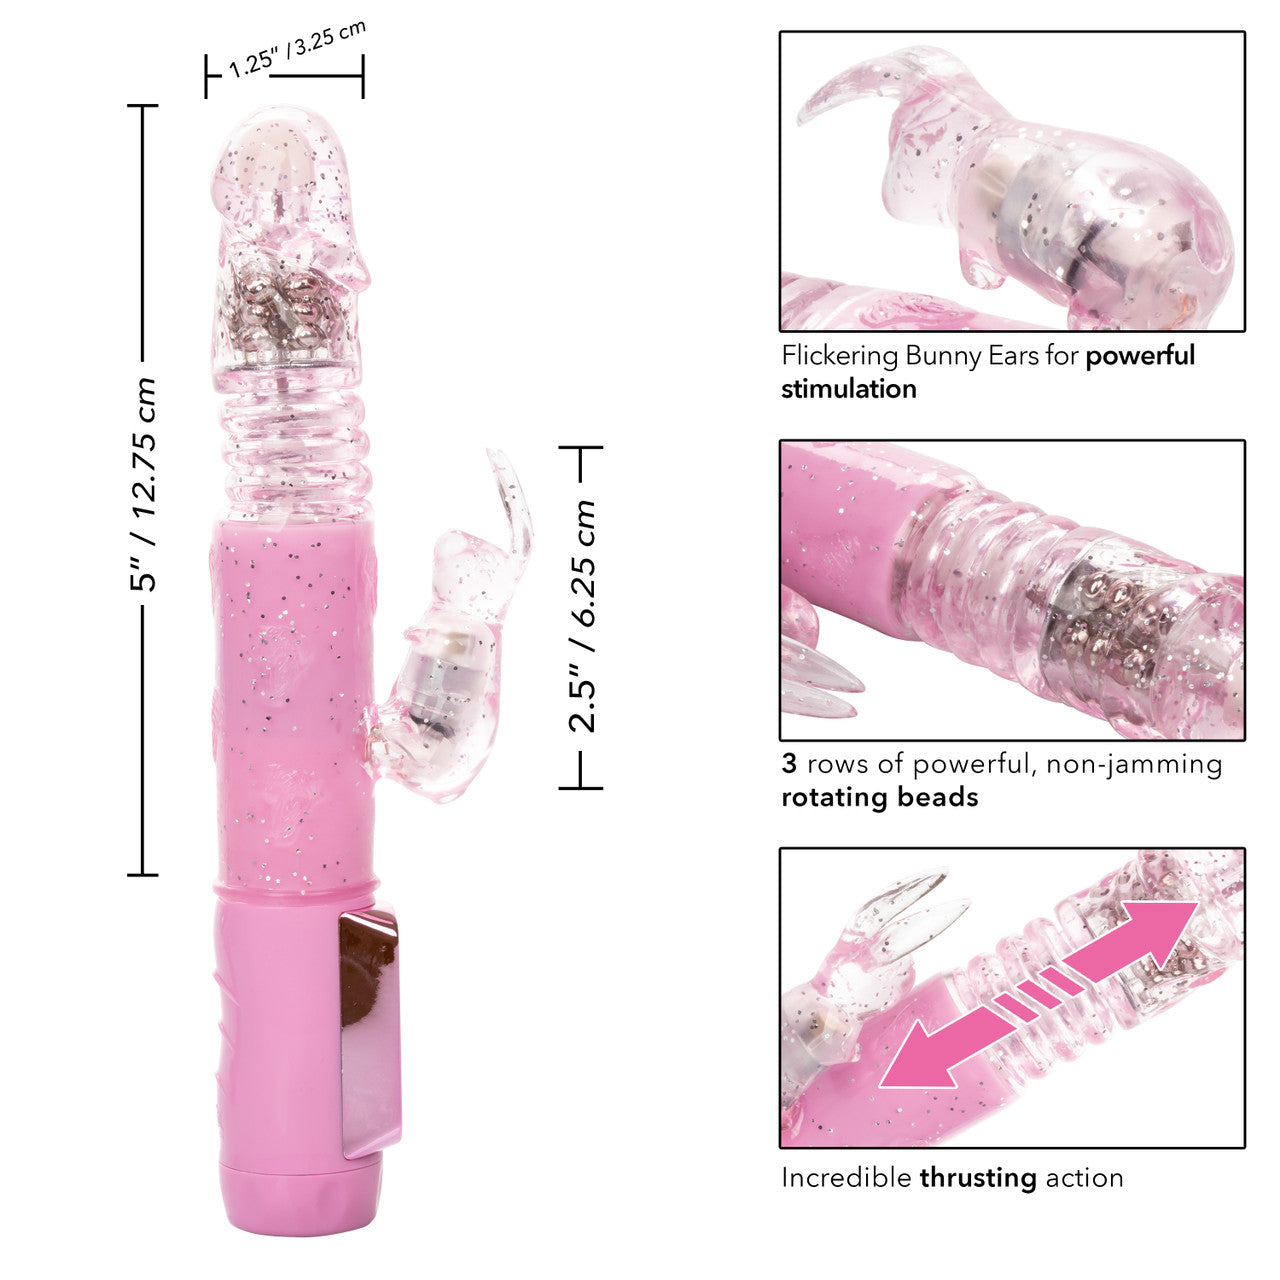 CalExotics Petite Thrusting Jack Rabbit Vibe - Pink